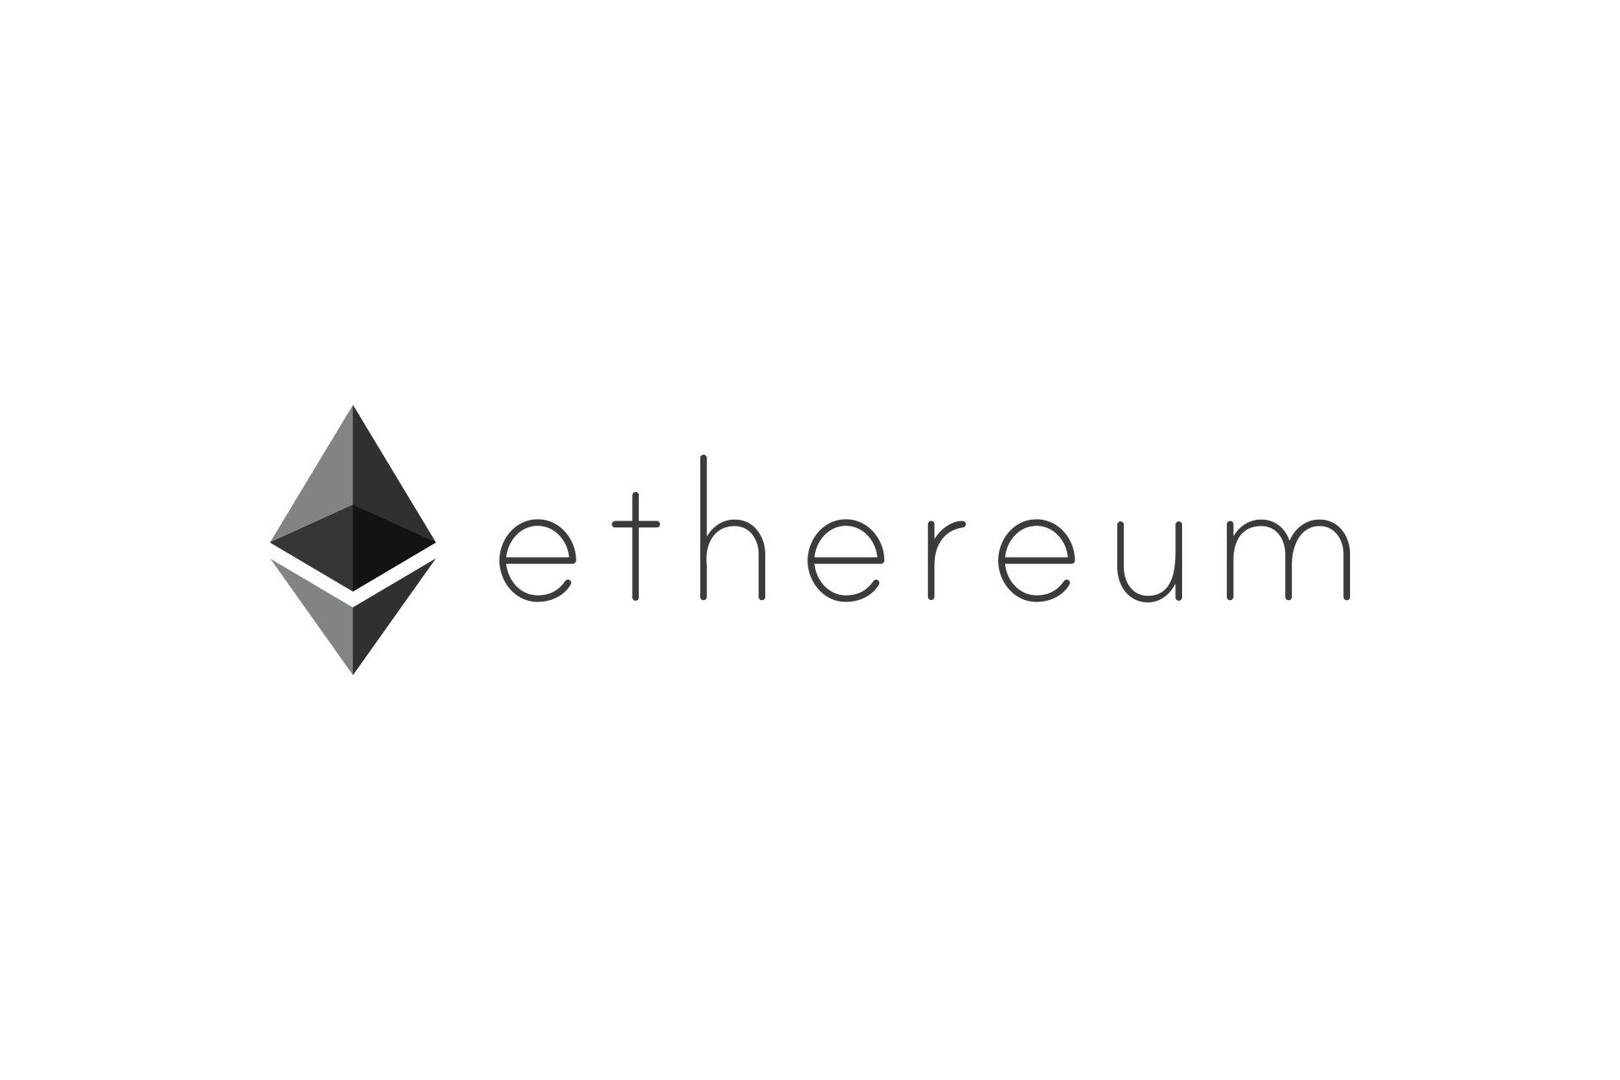 Microsoft Blockchain Logo - Microsoft and Ethereum want everyone on the blockchain